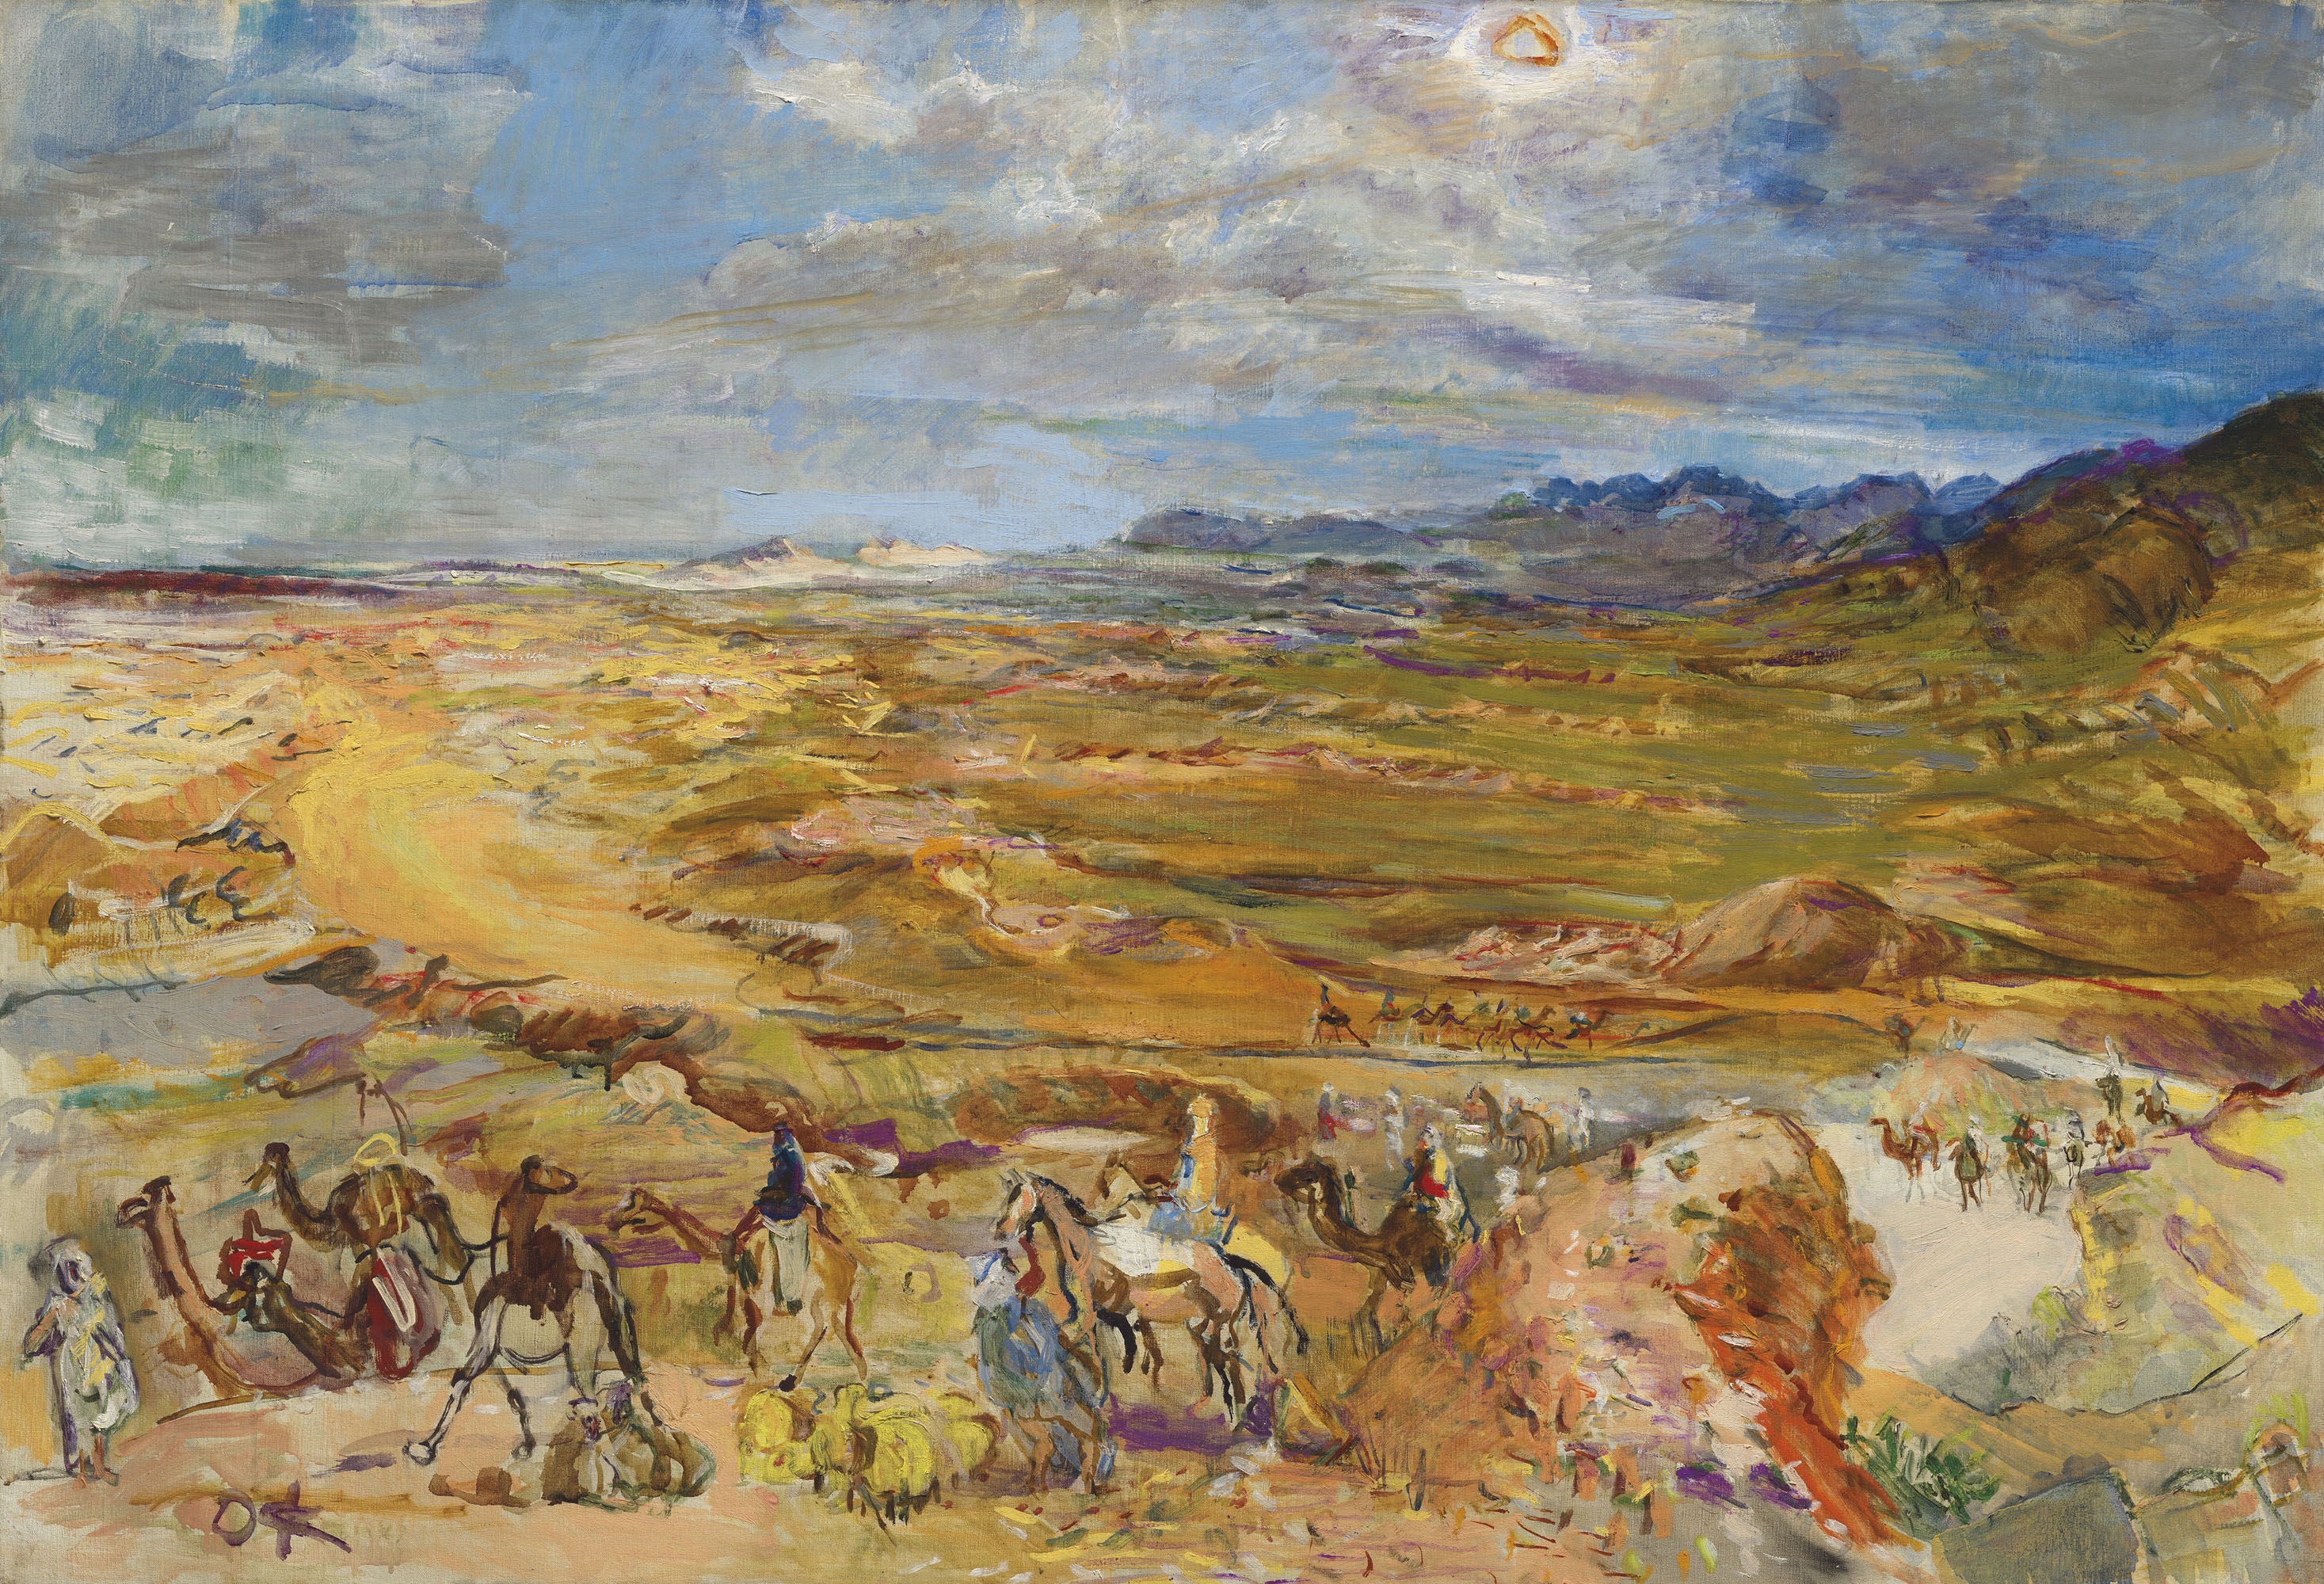 Exodus (Col de Sfa bei Biskra) by Oskar Kokoschka, Painted in February 1928